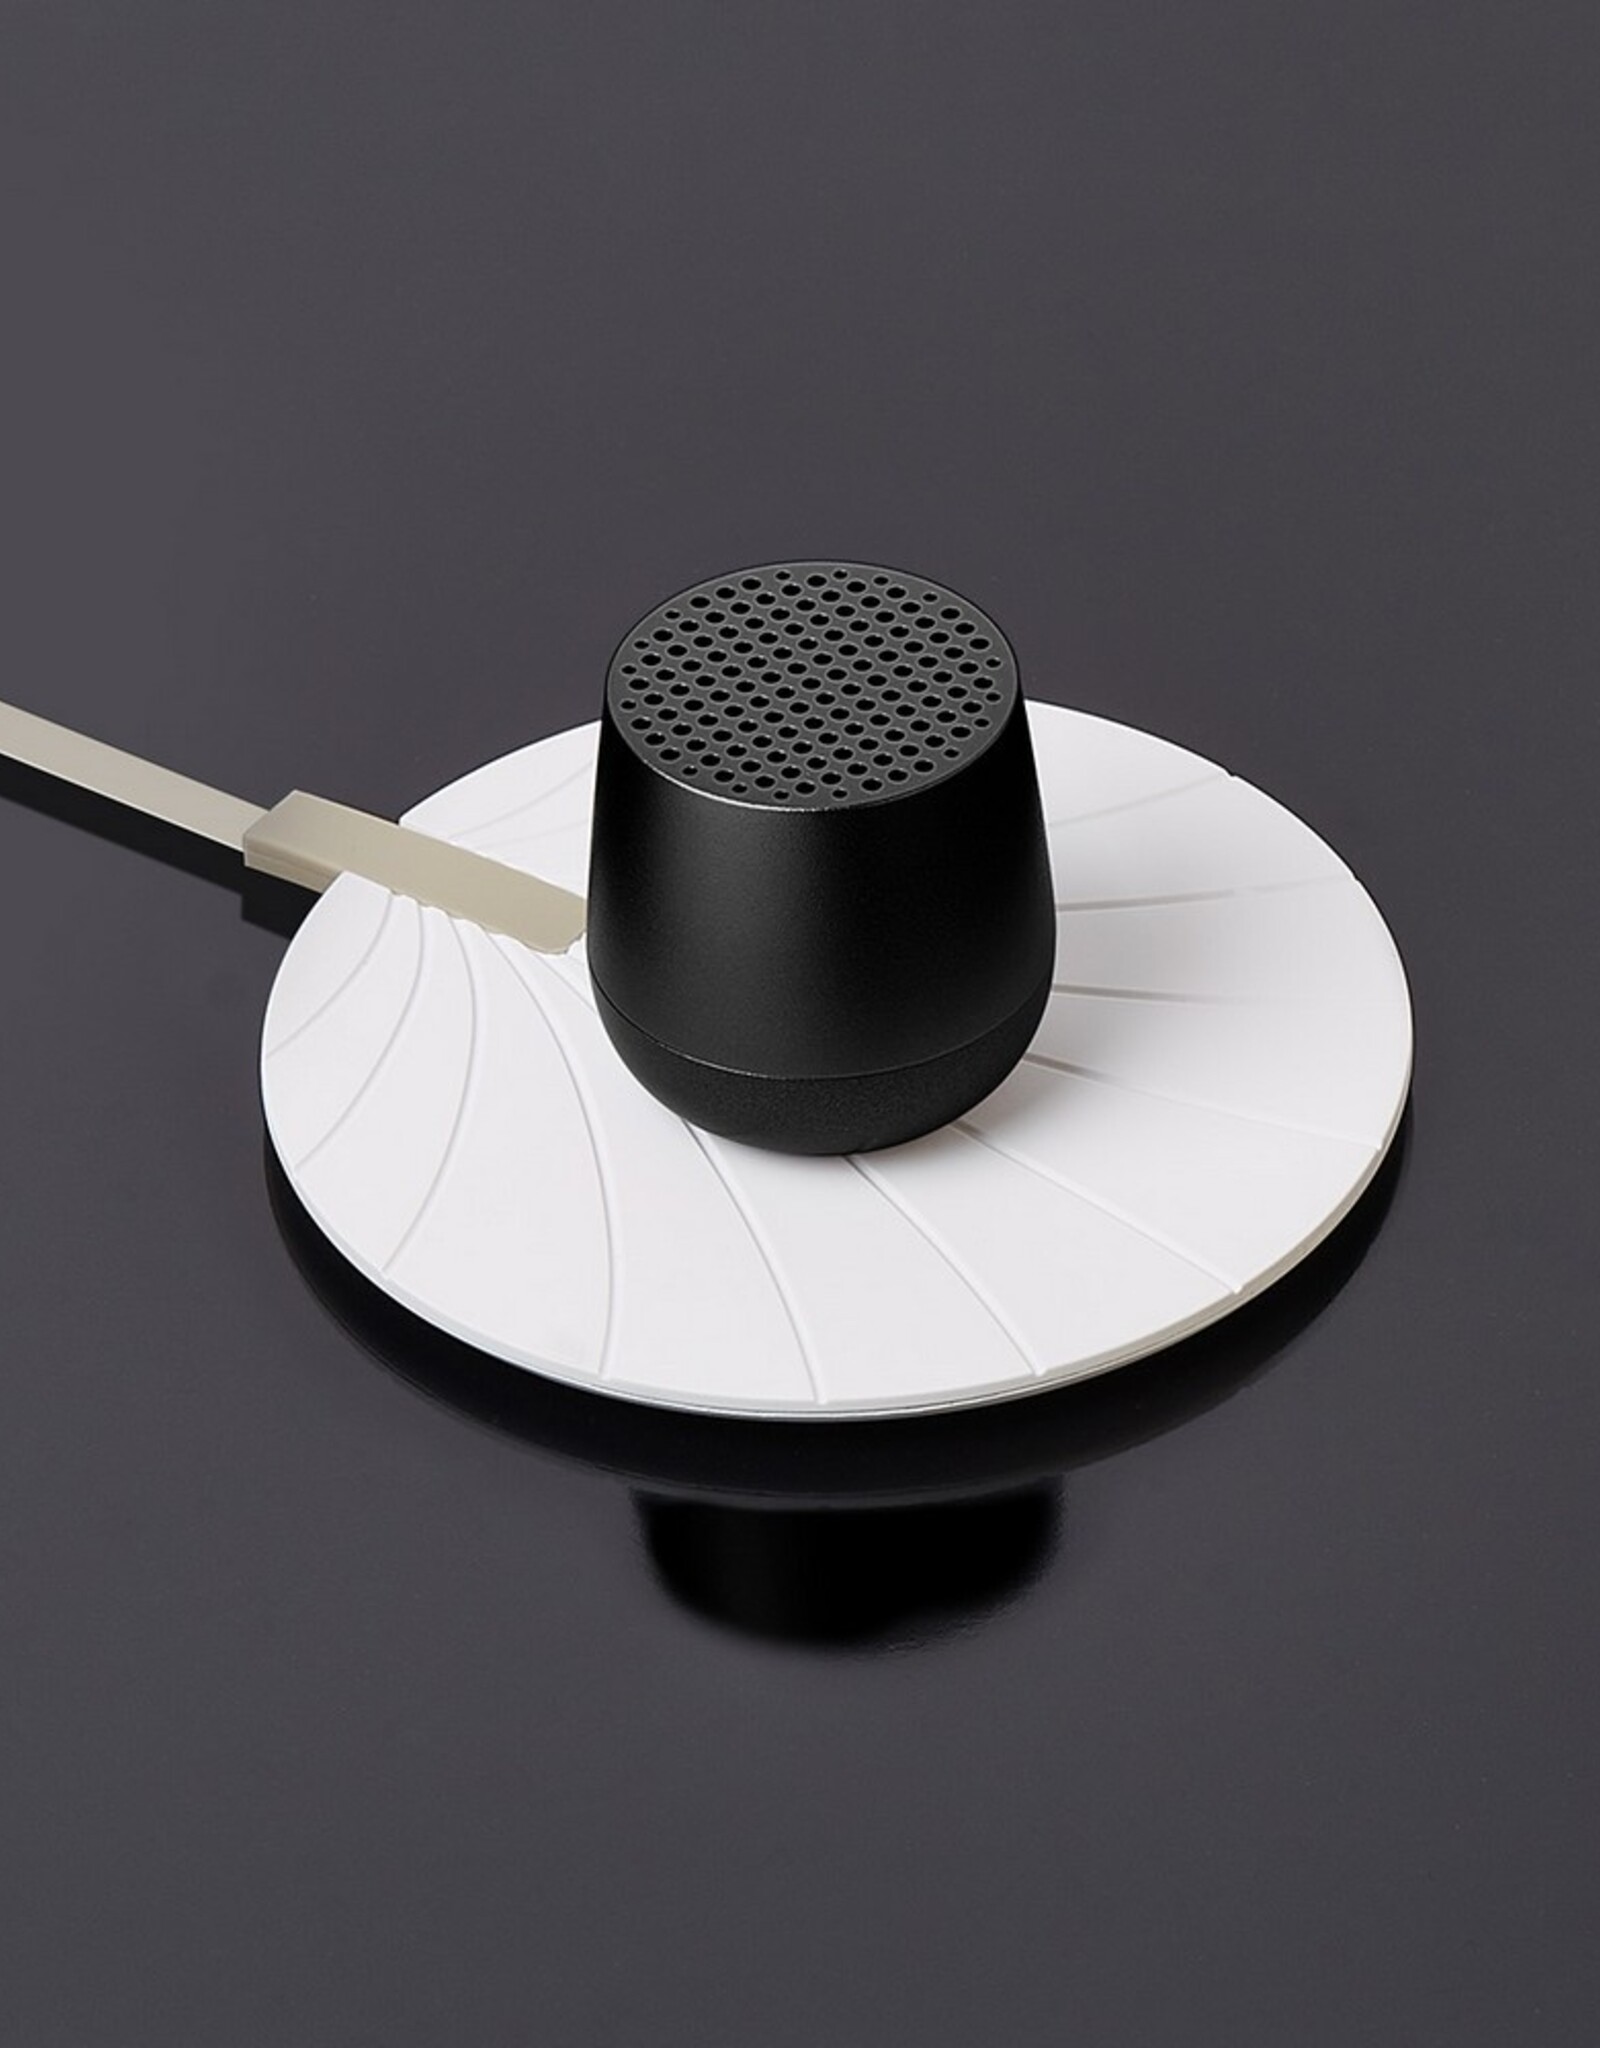 Lexon Speaker Bluetooth Mino  + Zwart